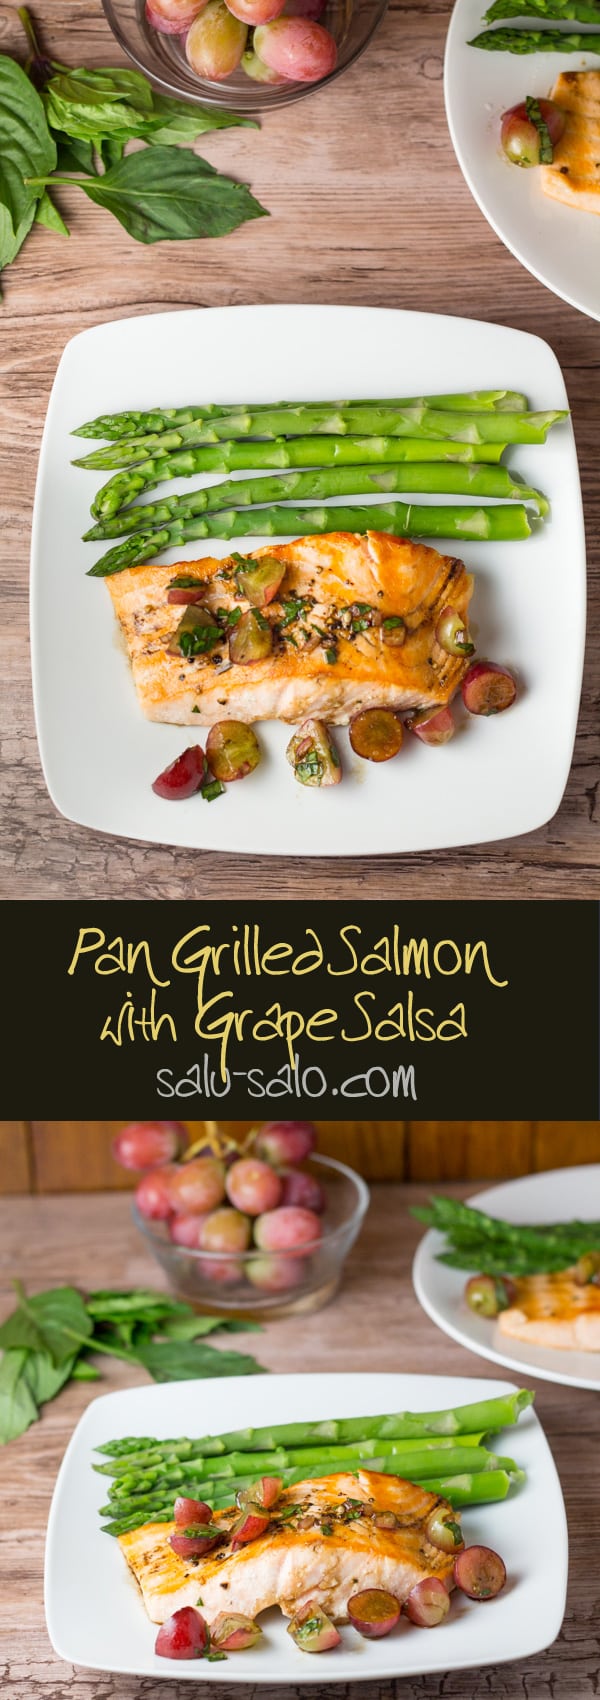 Pan Grilled Salmon with Grape Salsa